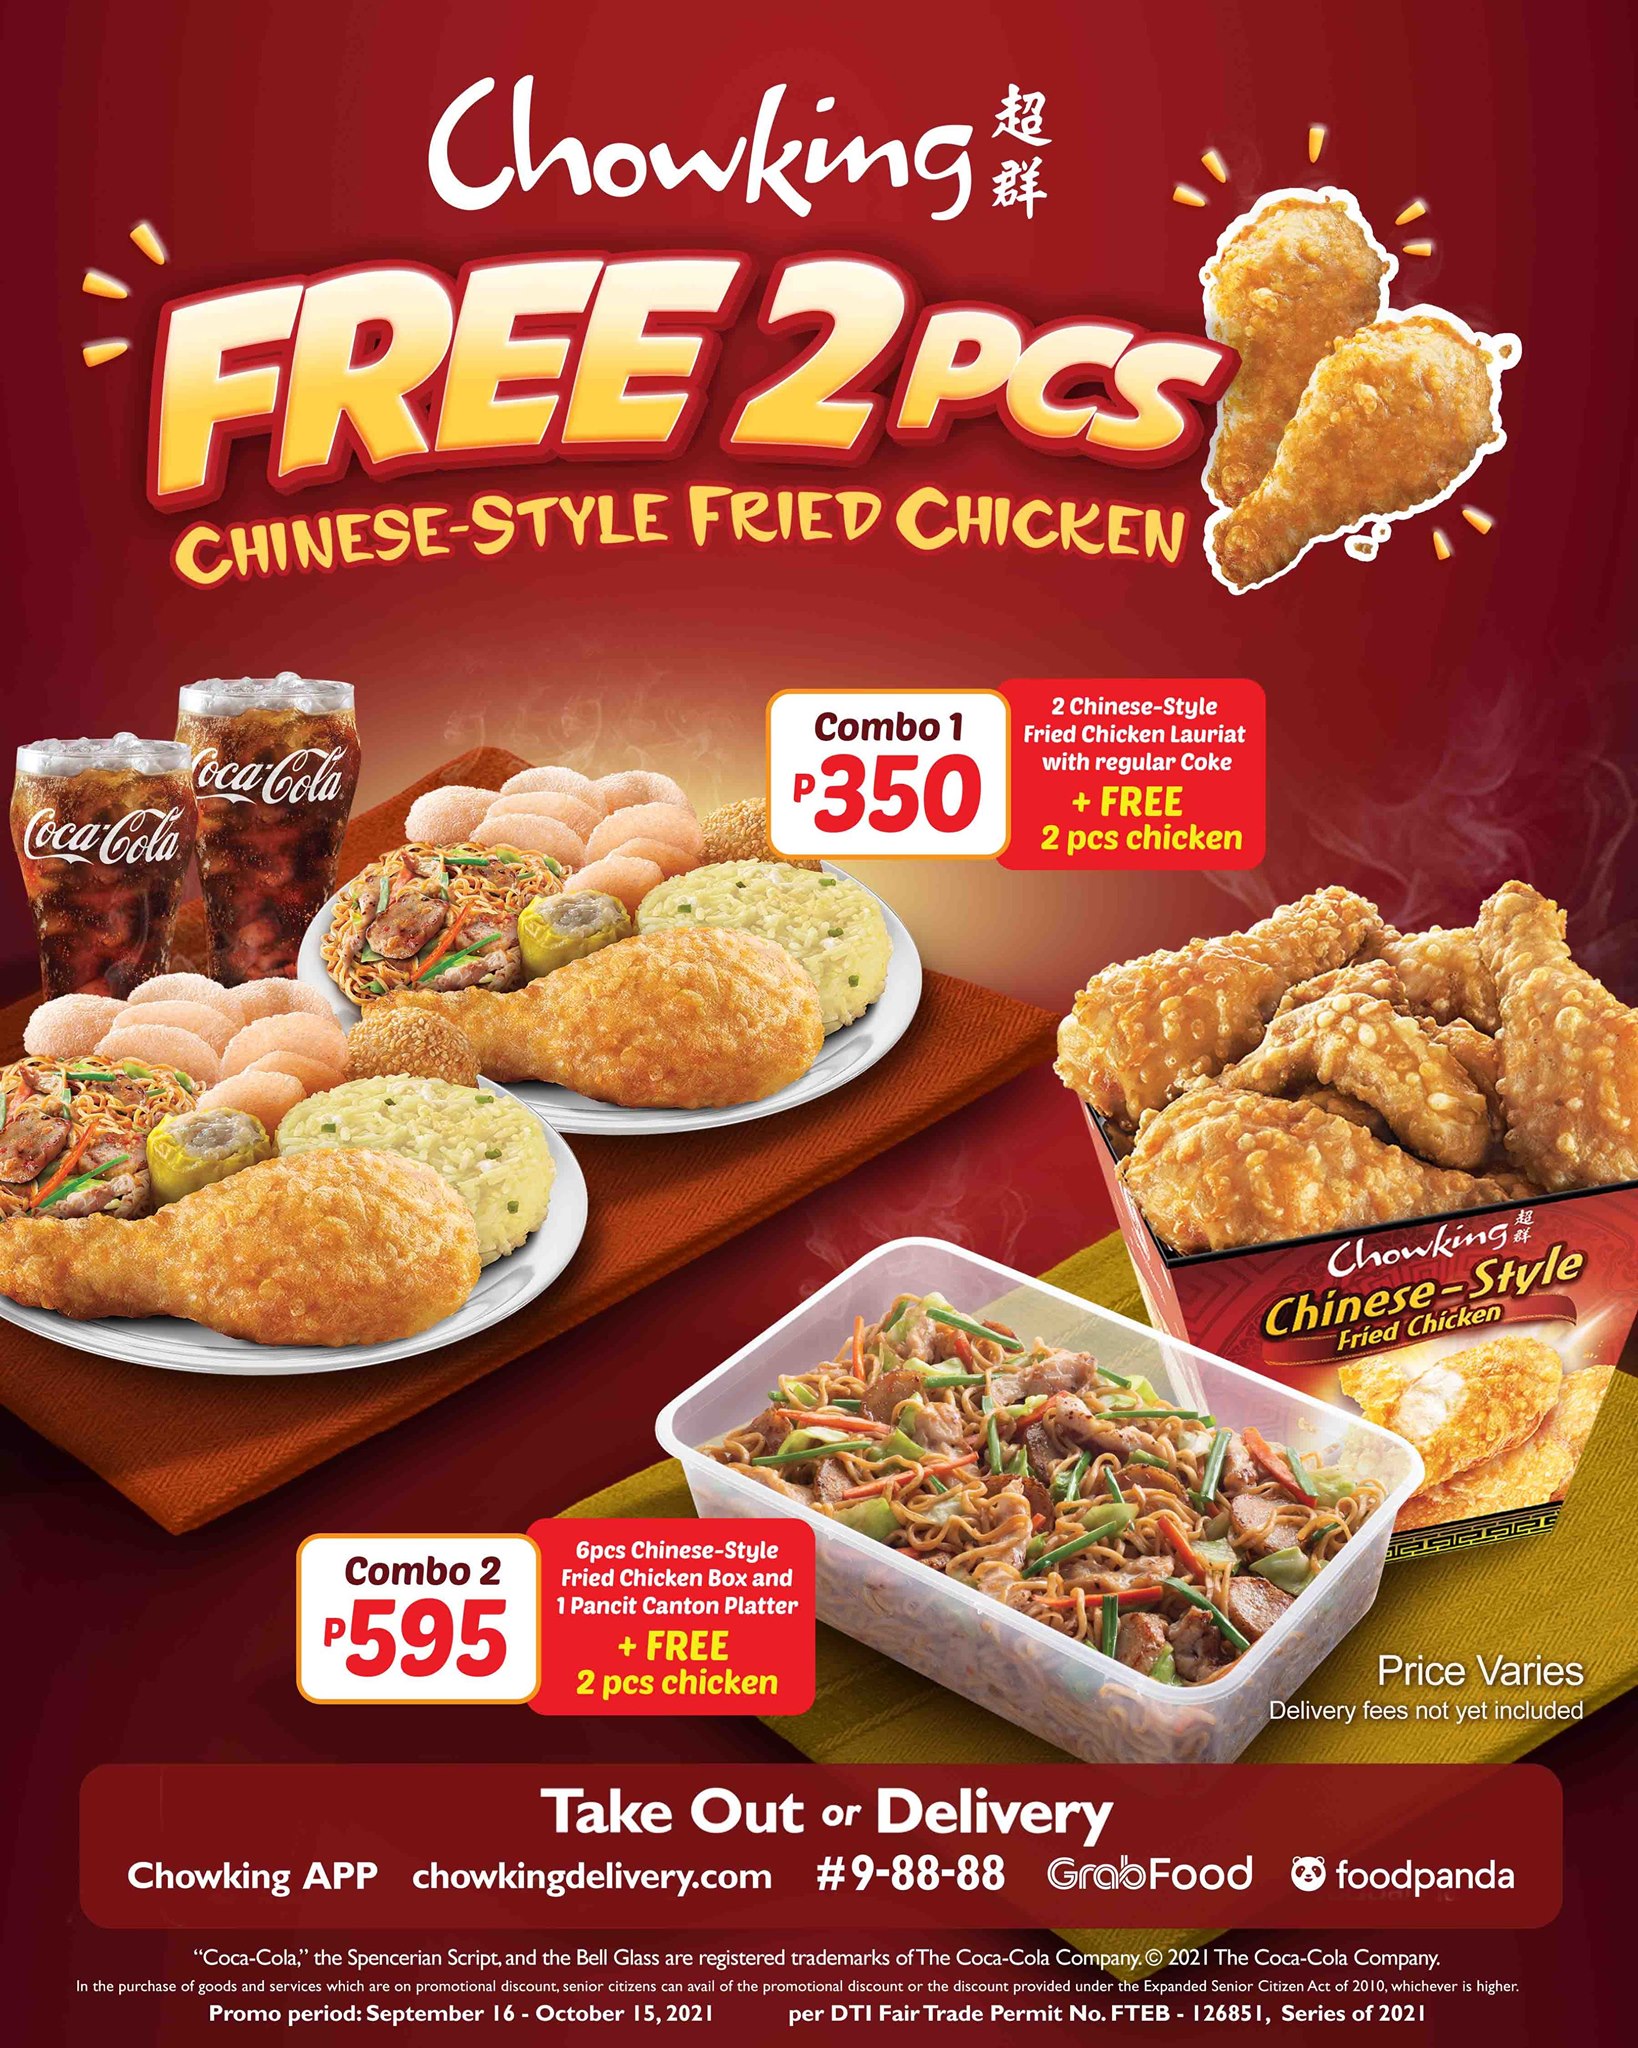 Chowking FREE 2pcs Fried Chicken Promo Manila On Sale